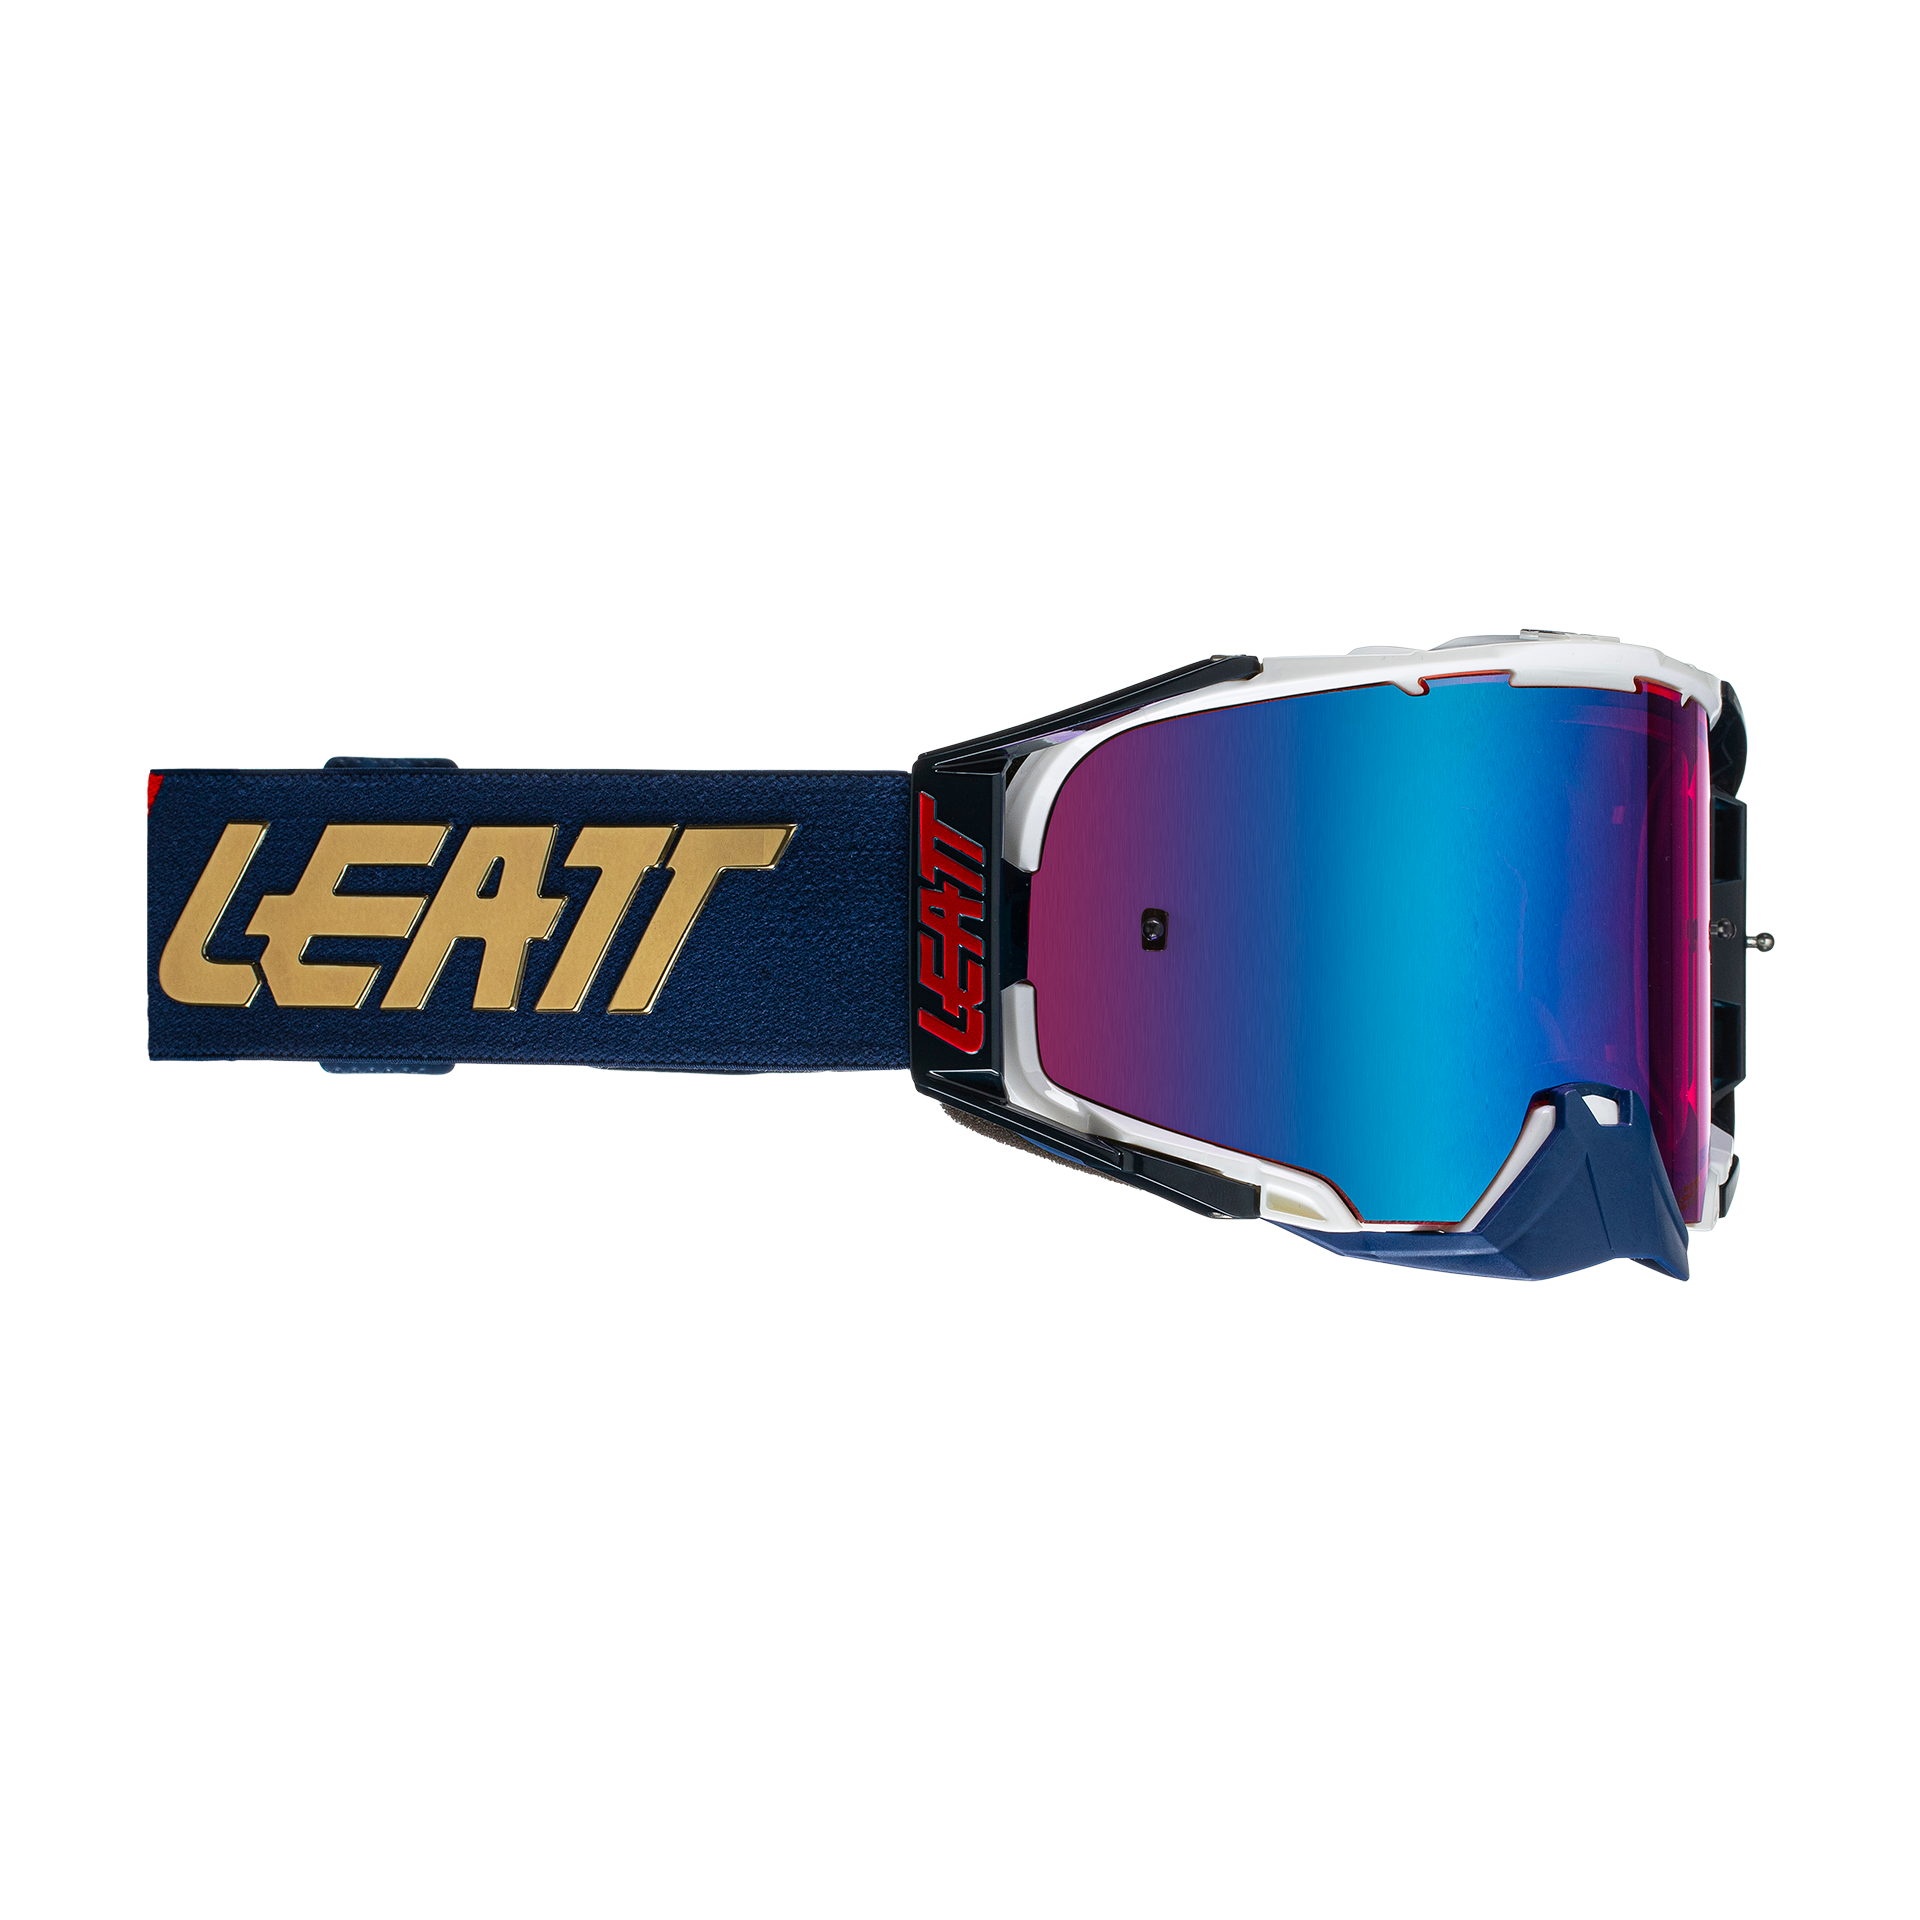 Leatt Protection Goggle Velocity 6.5 Royal With Iriz Blue Us 26